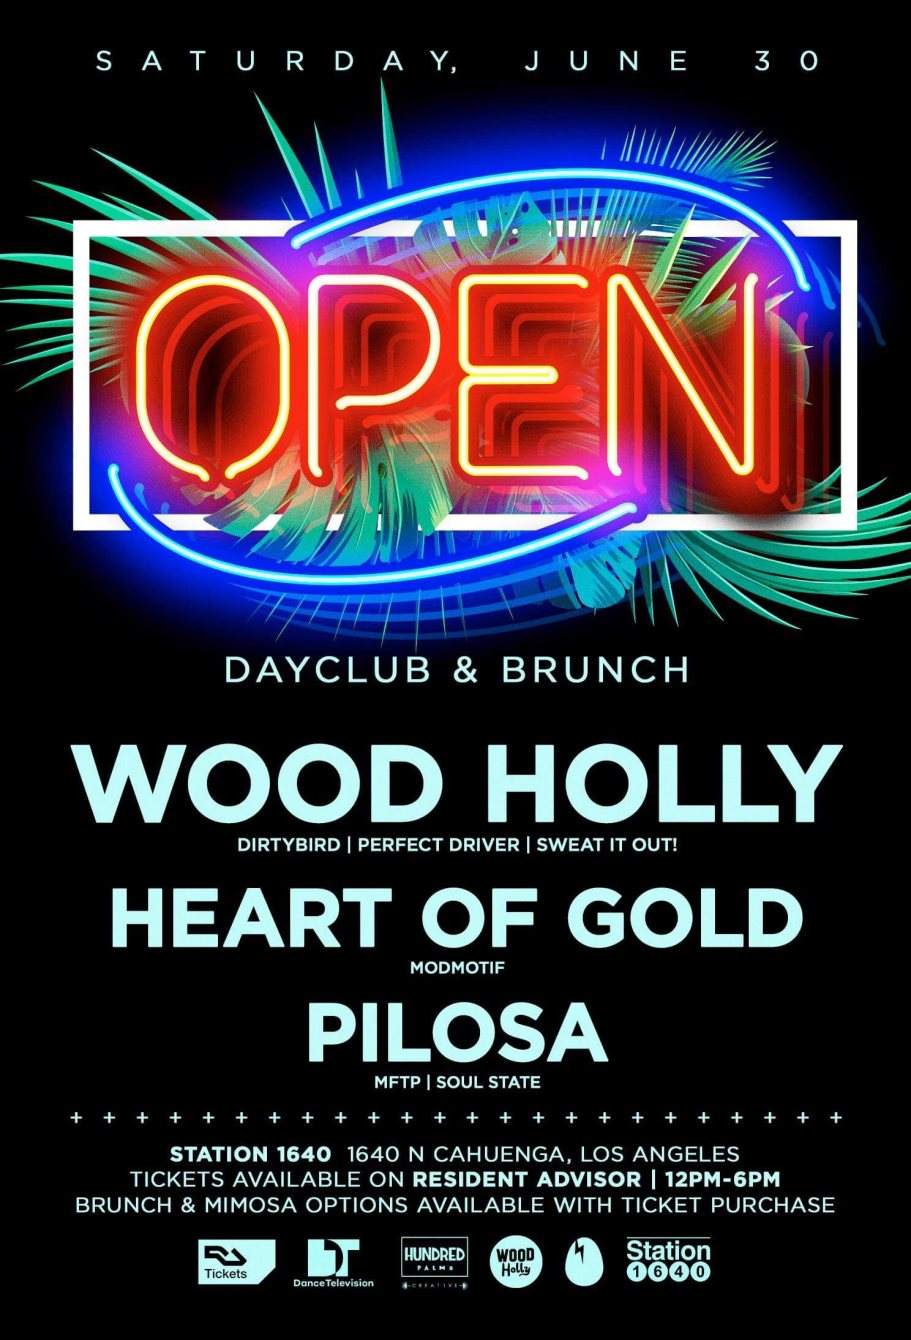 Open - Dayclub & Brunch Launch Event - Wood Holly (Dirtybird) - Heart of Gold - Pilosa - Página frontal